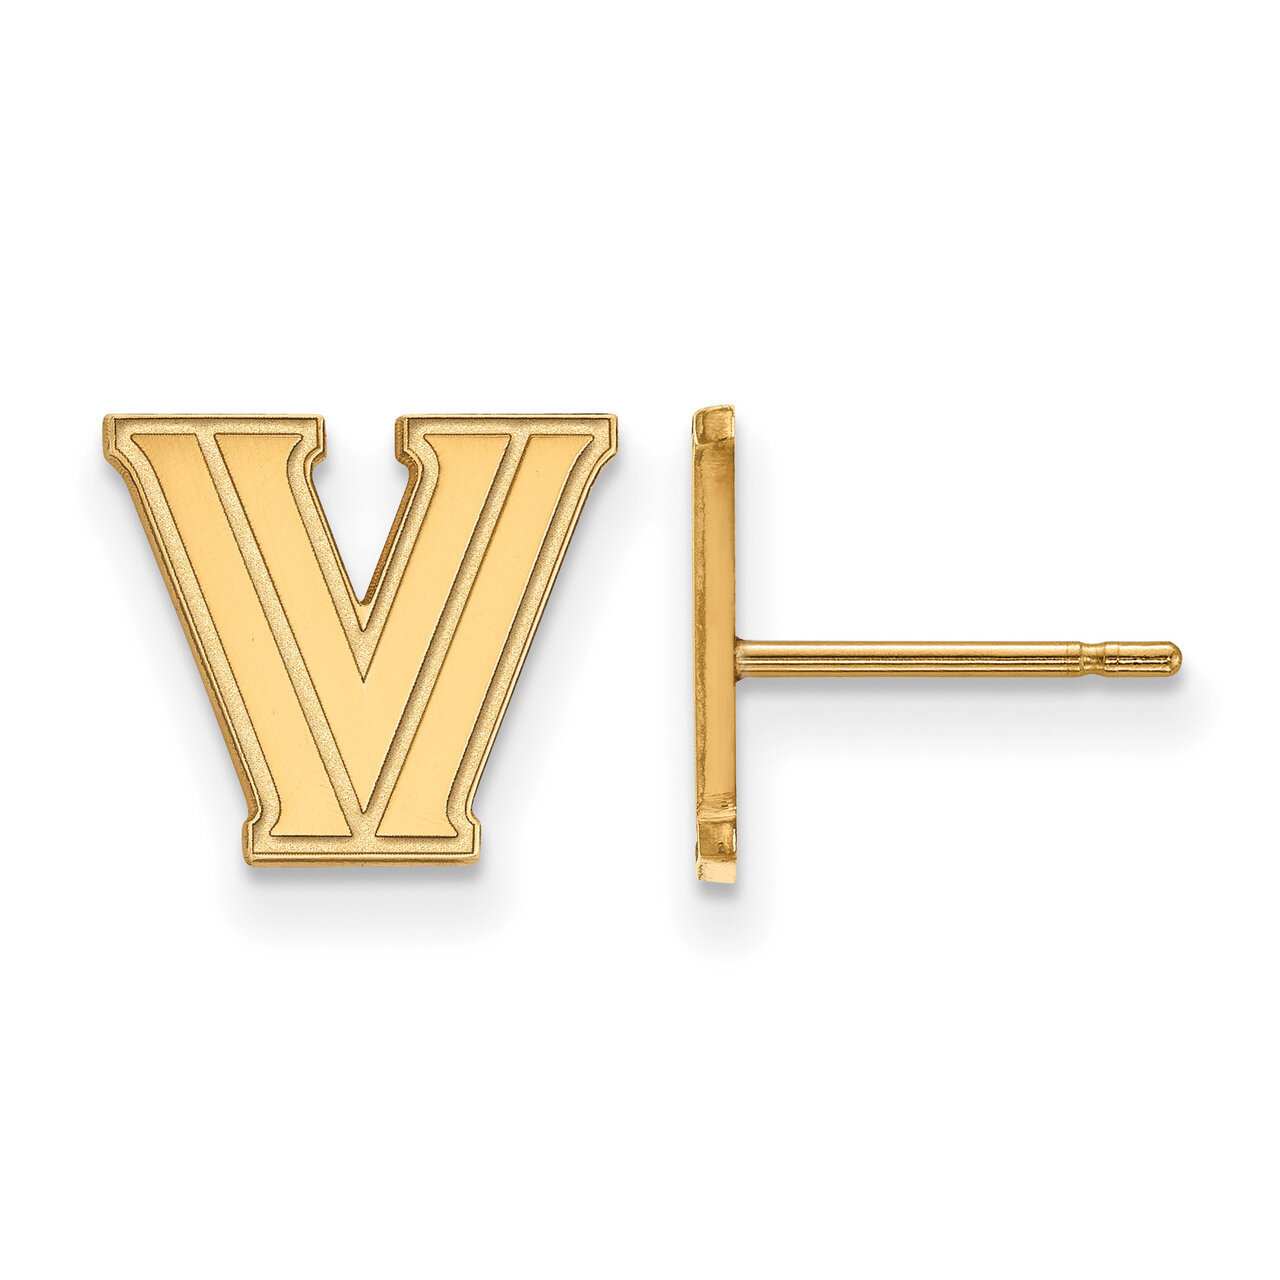 Villanova University x-Small Post Earrings Gold-plated Sterling Silver GP006VIL